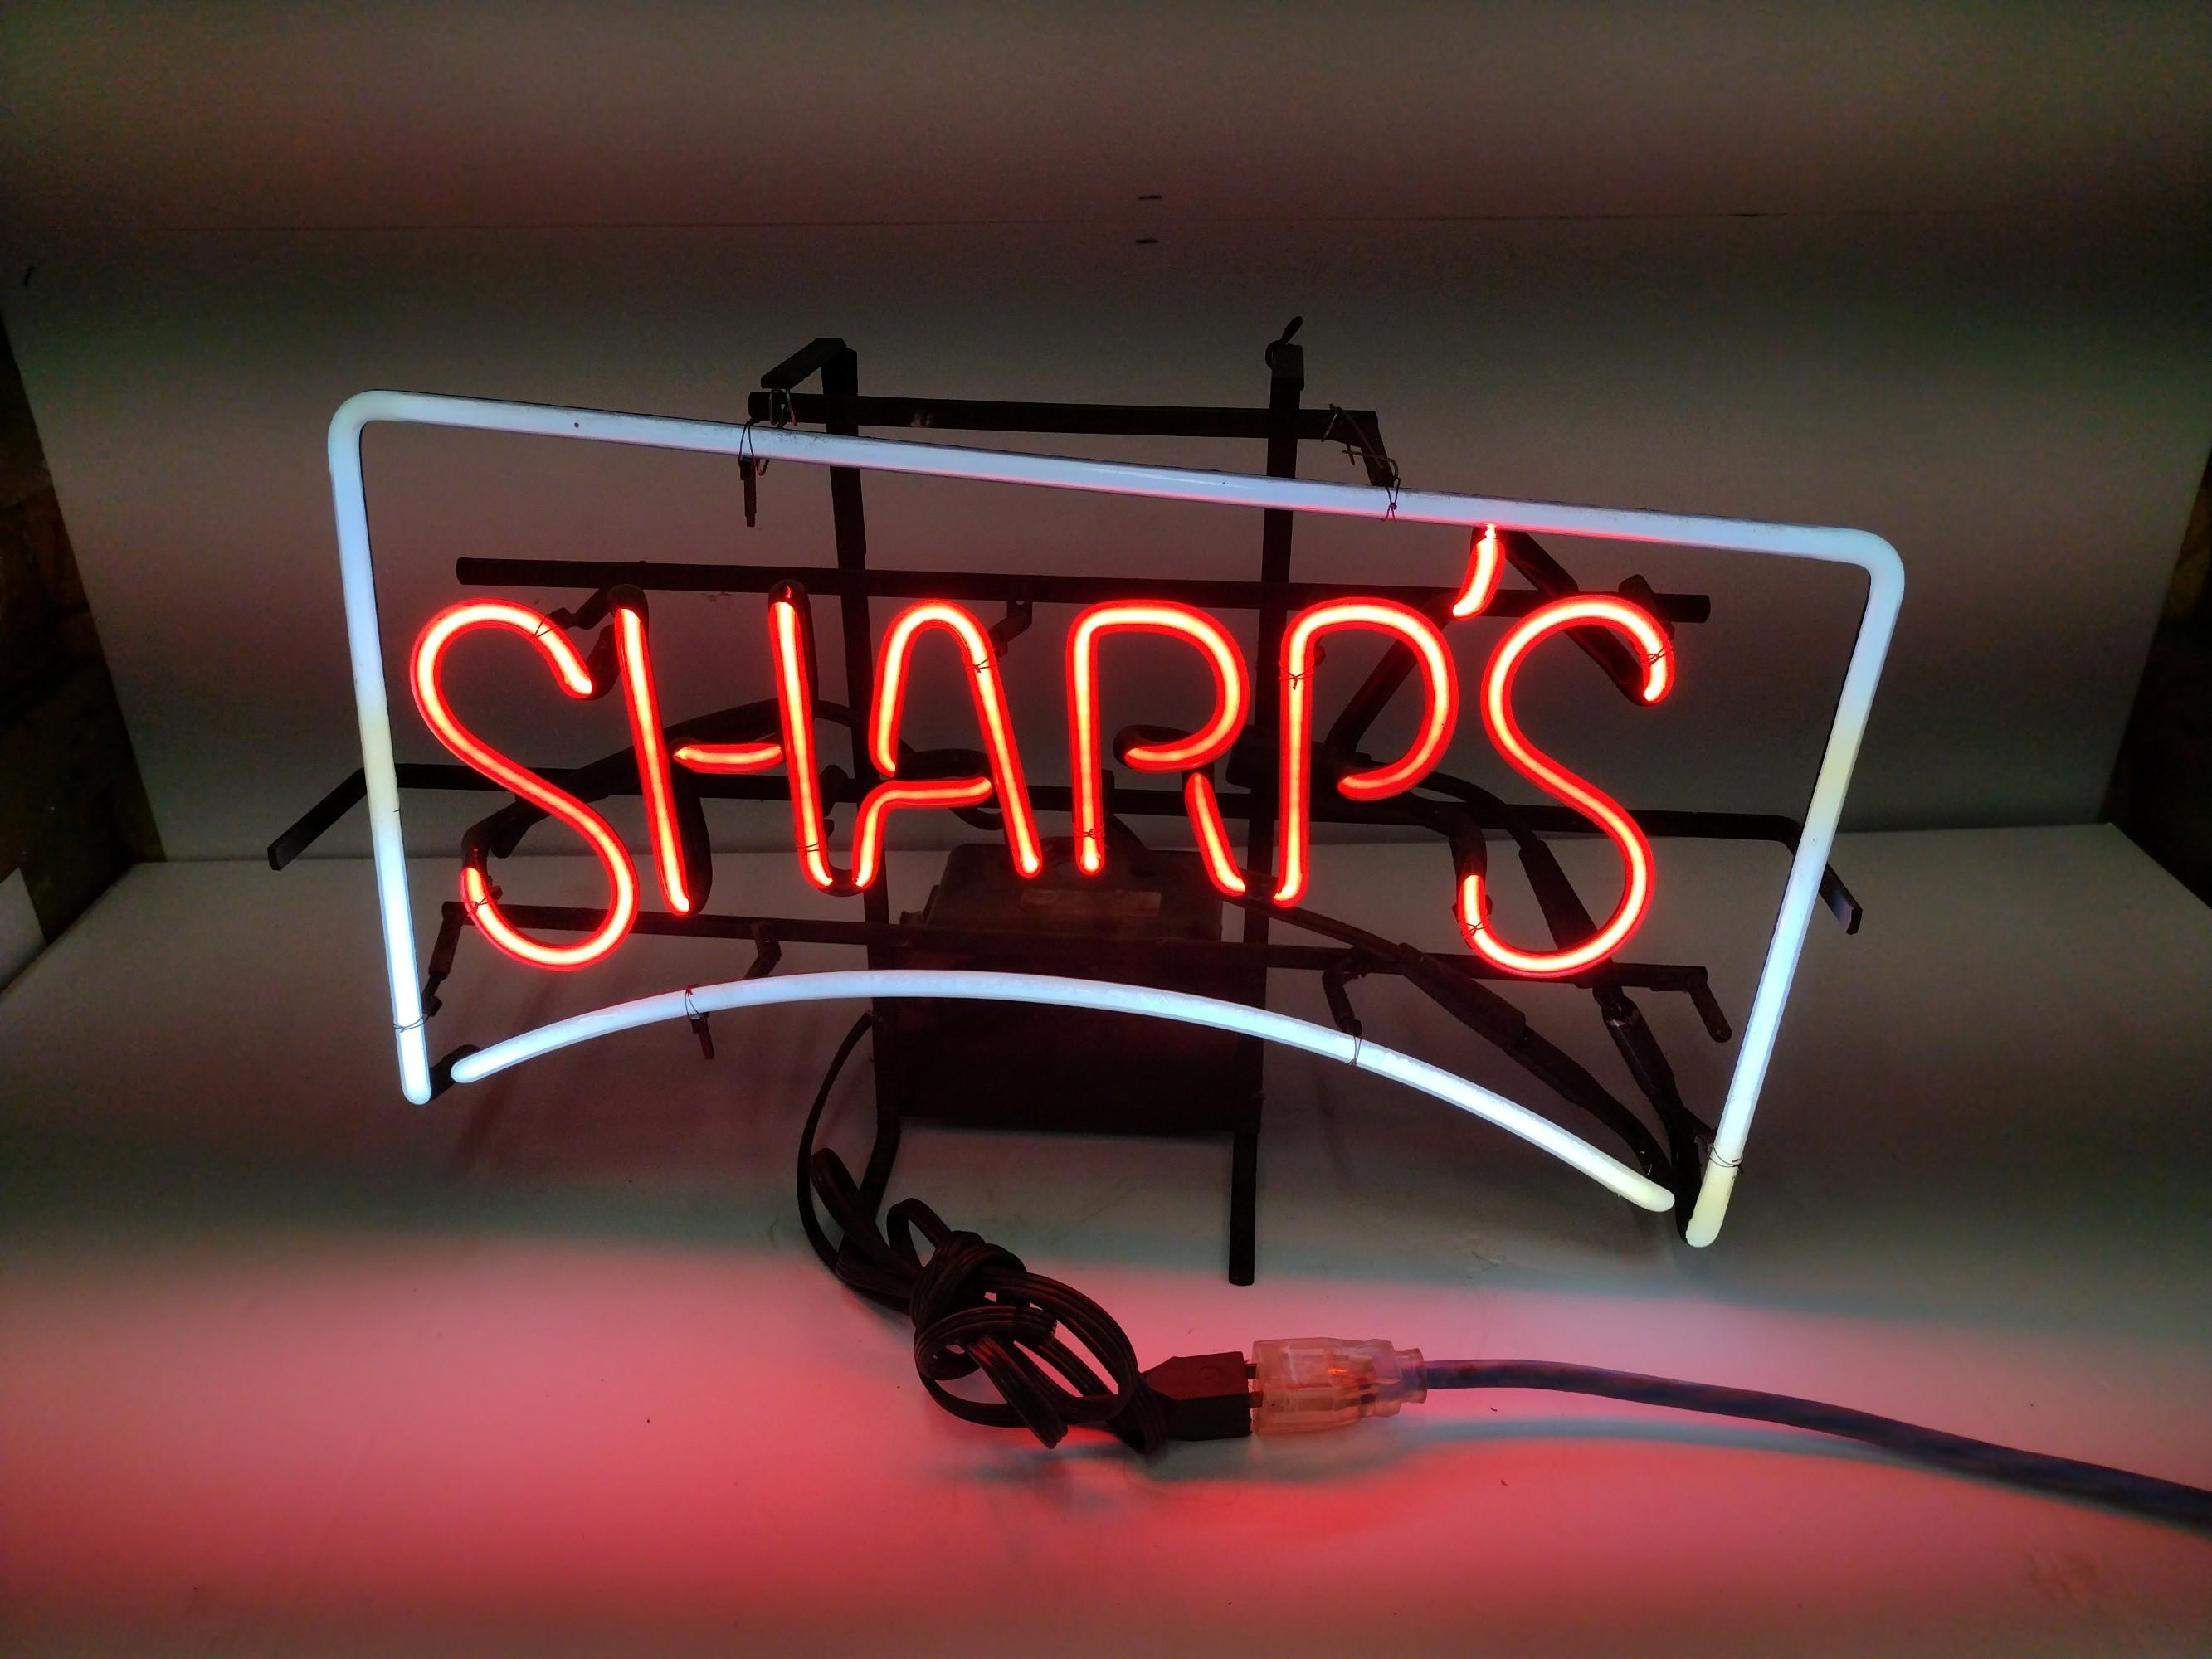 Sharps Neon Advertising Sign